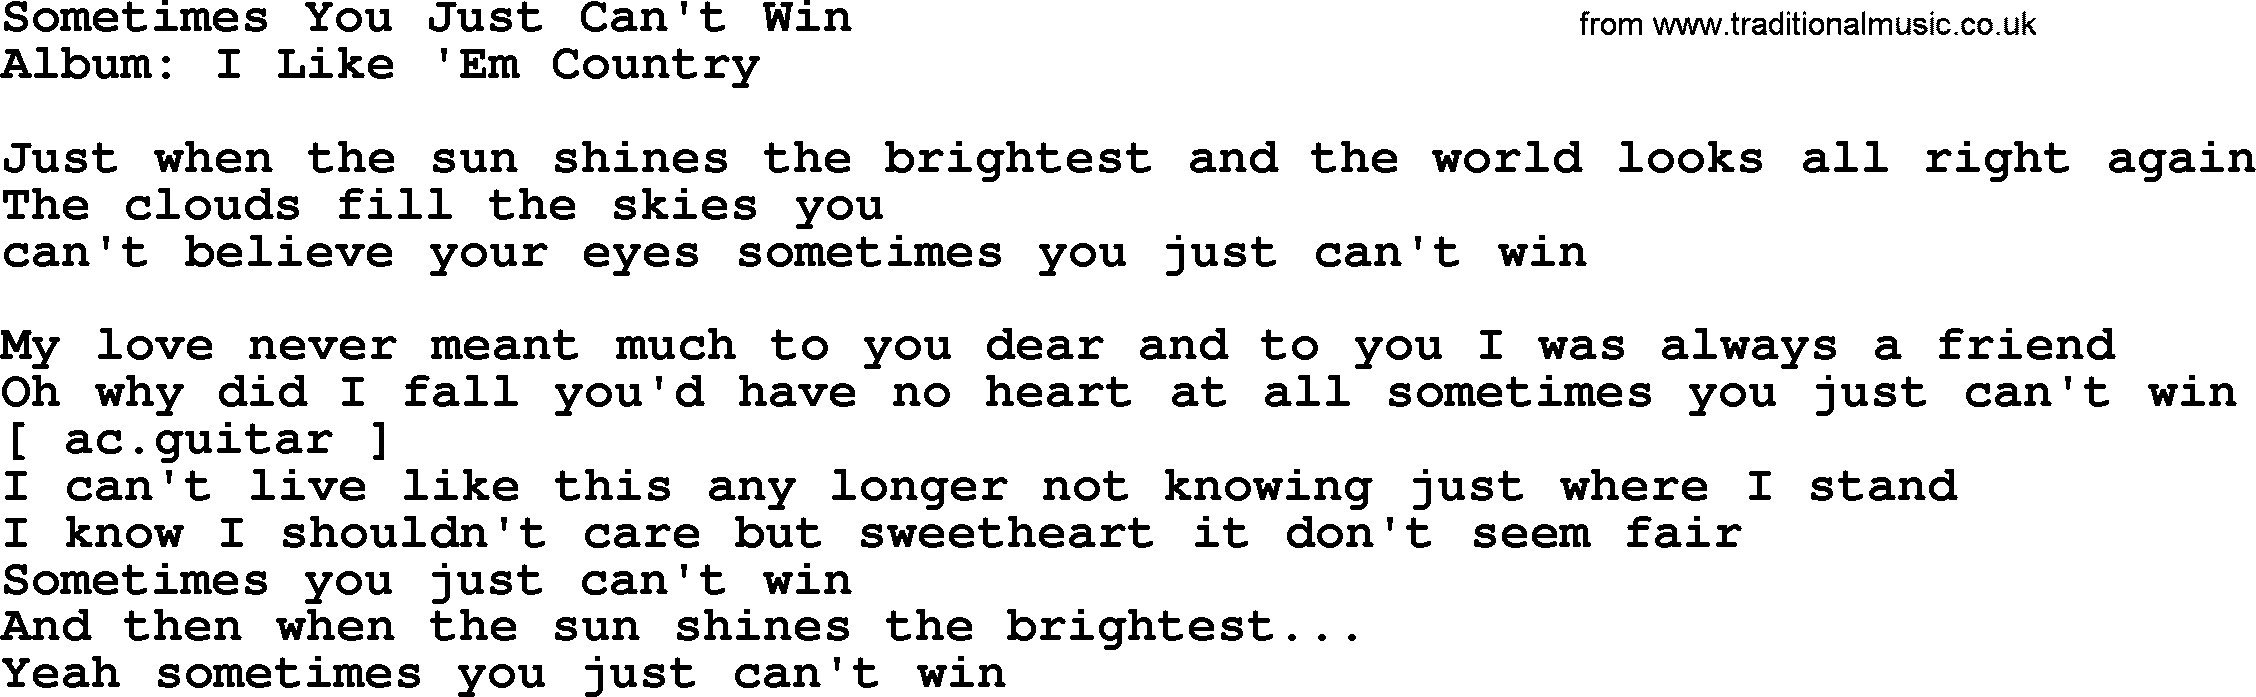 Loretta Lynn song: Sometimes You Just Can't Win lyrics